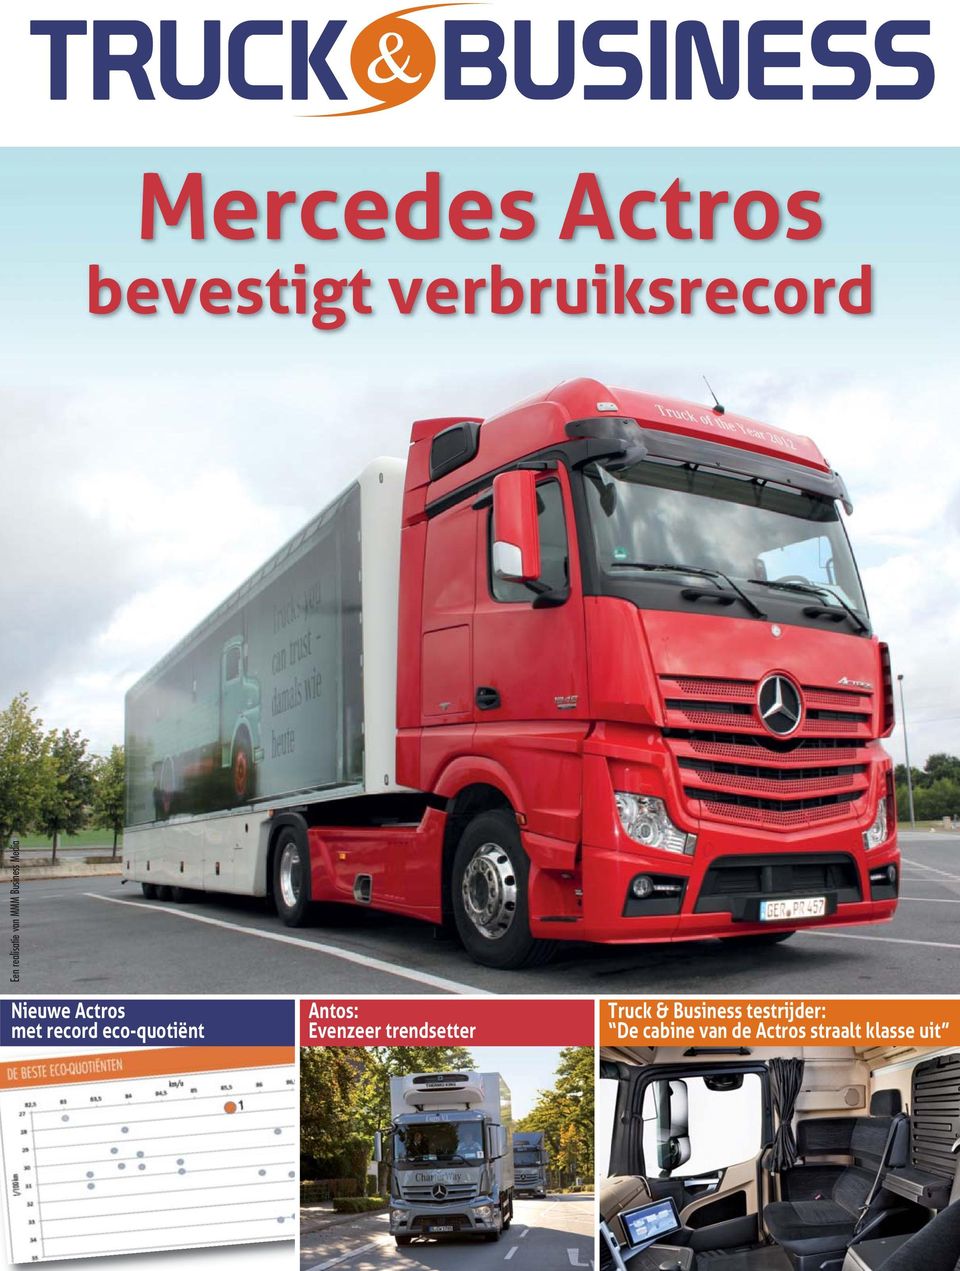 record eco-quotiënt Antos: Evenzeer trendsetter Truck